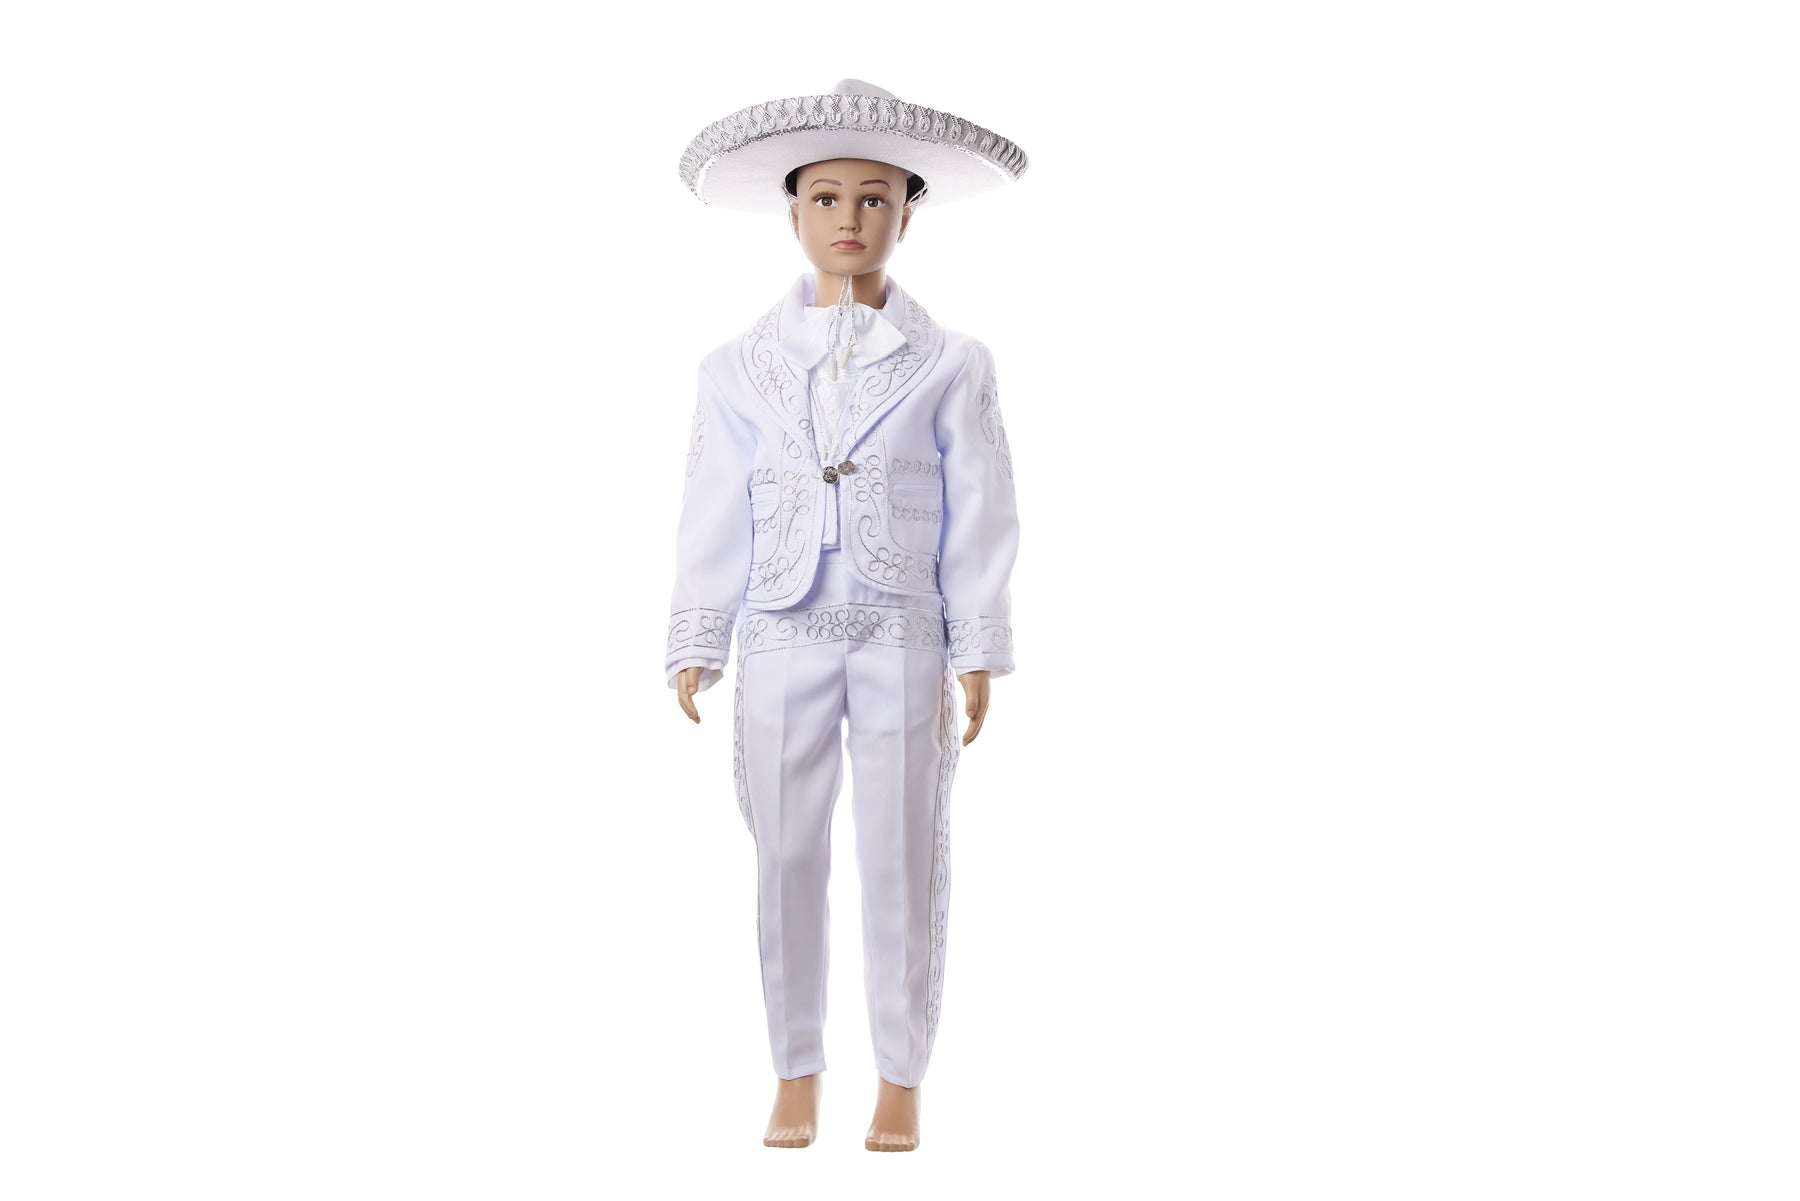 Boys Charro Baptism Outfit - White / Silver - Swirl Design